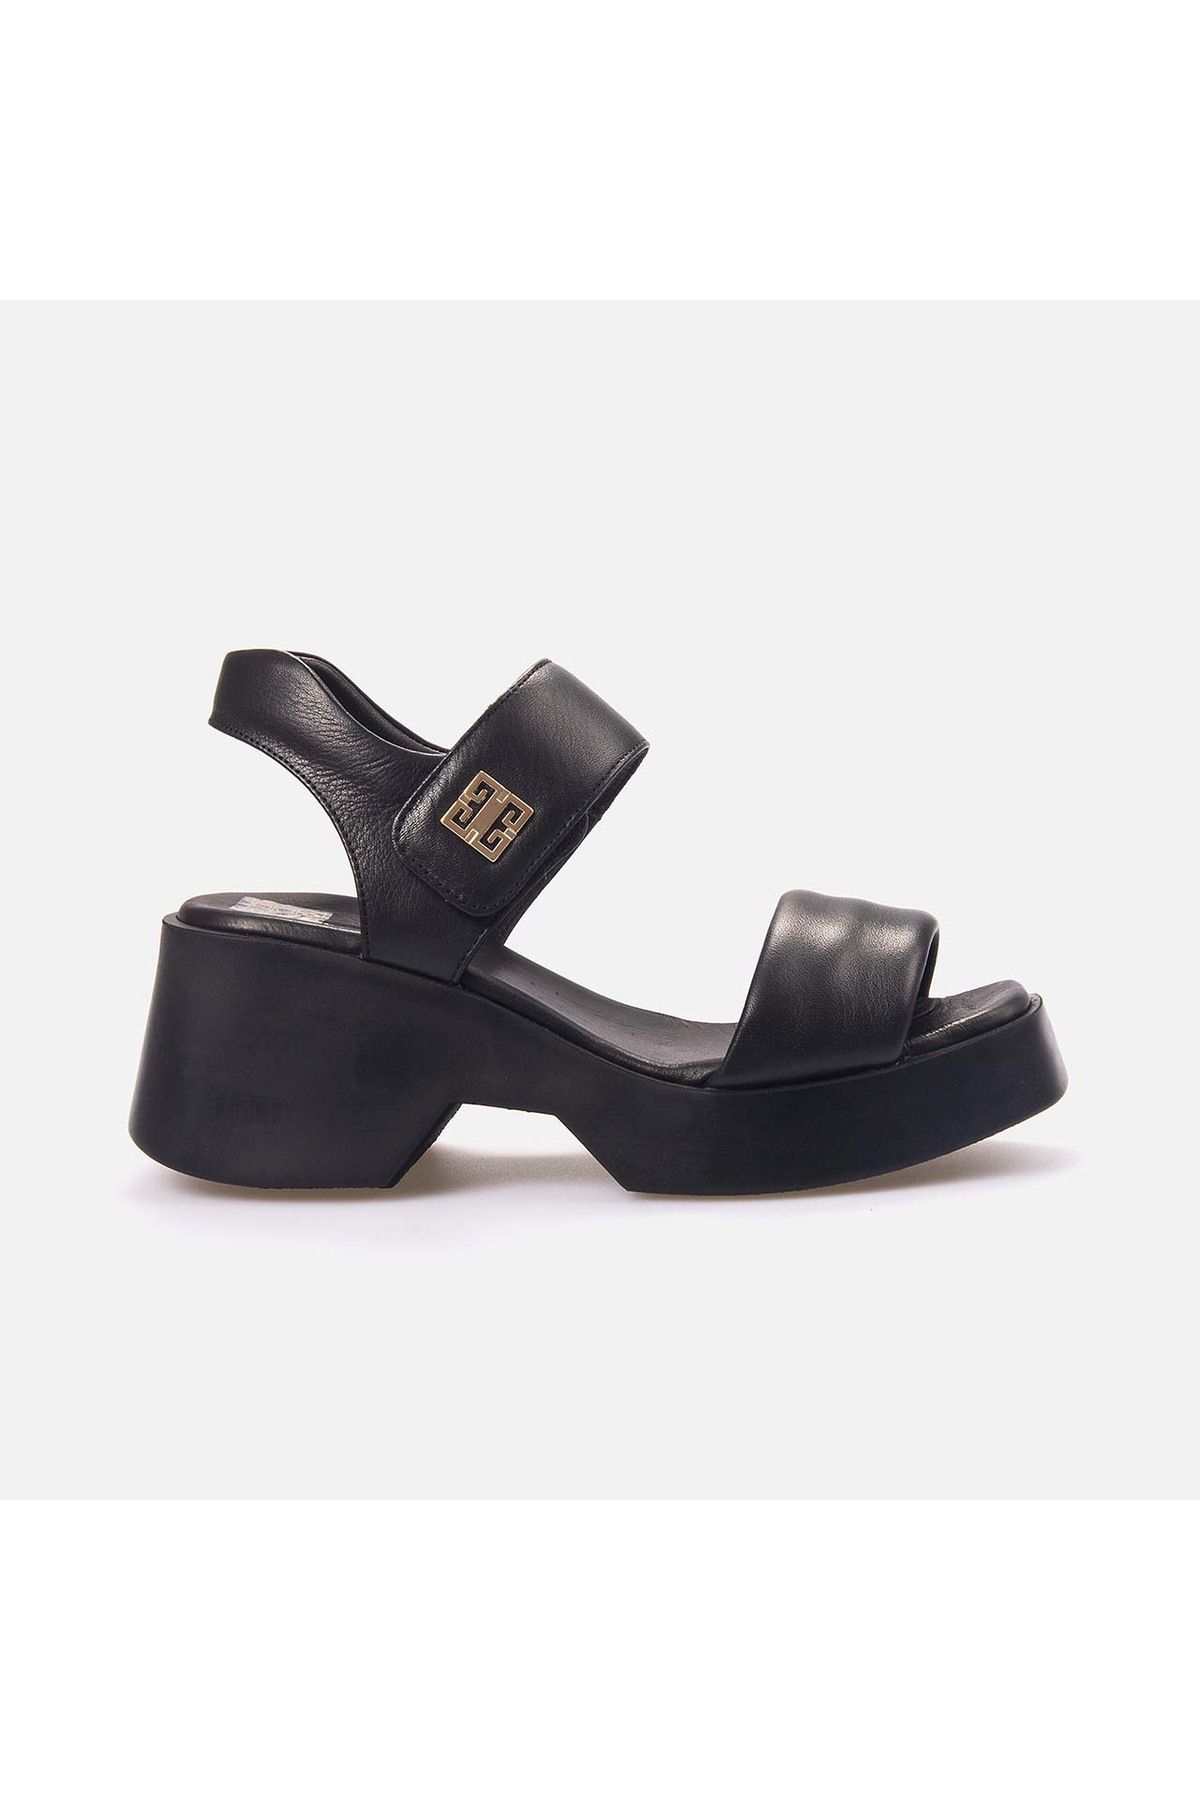 Kemal Tanca Deri  Kadın Platform Topuk Sandalet 082-604